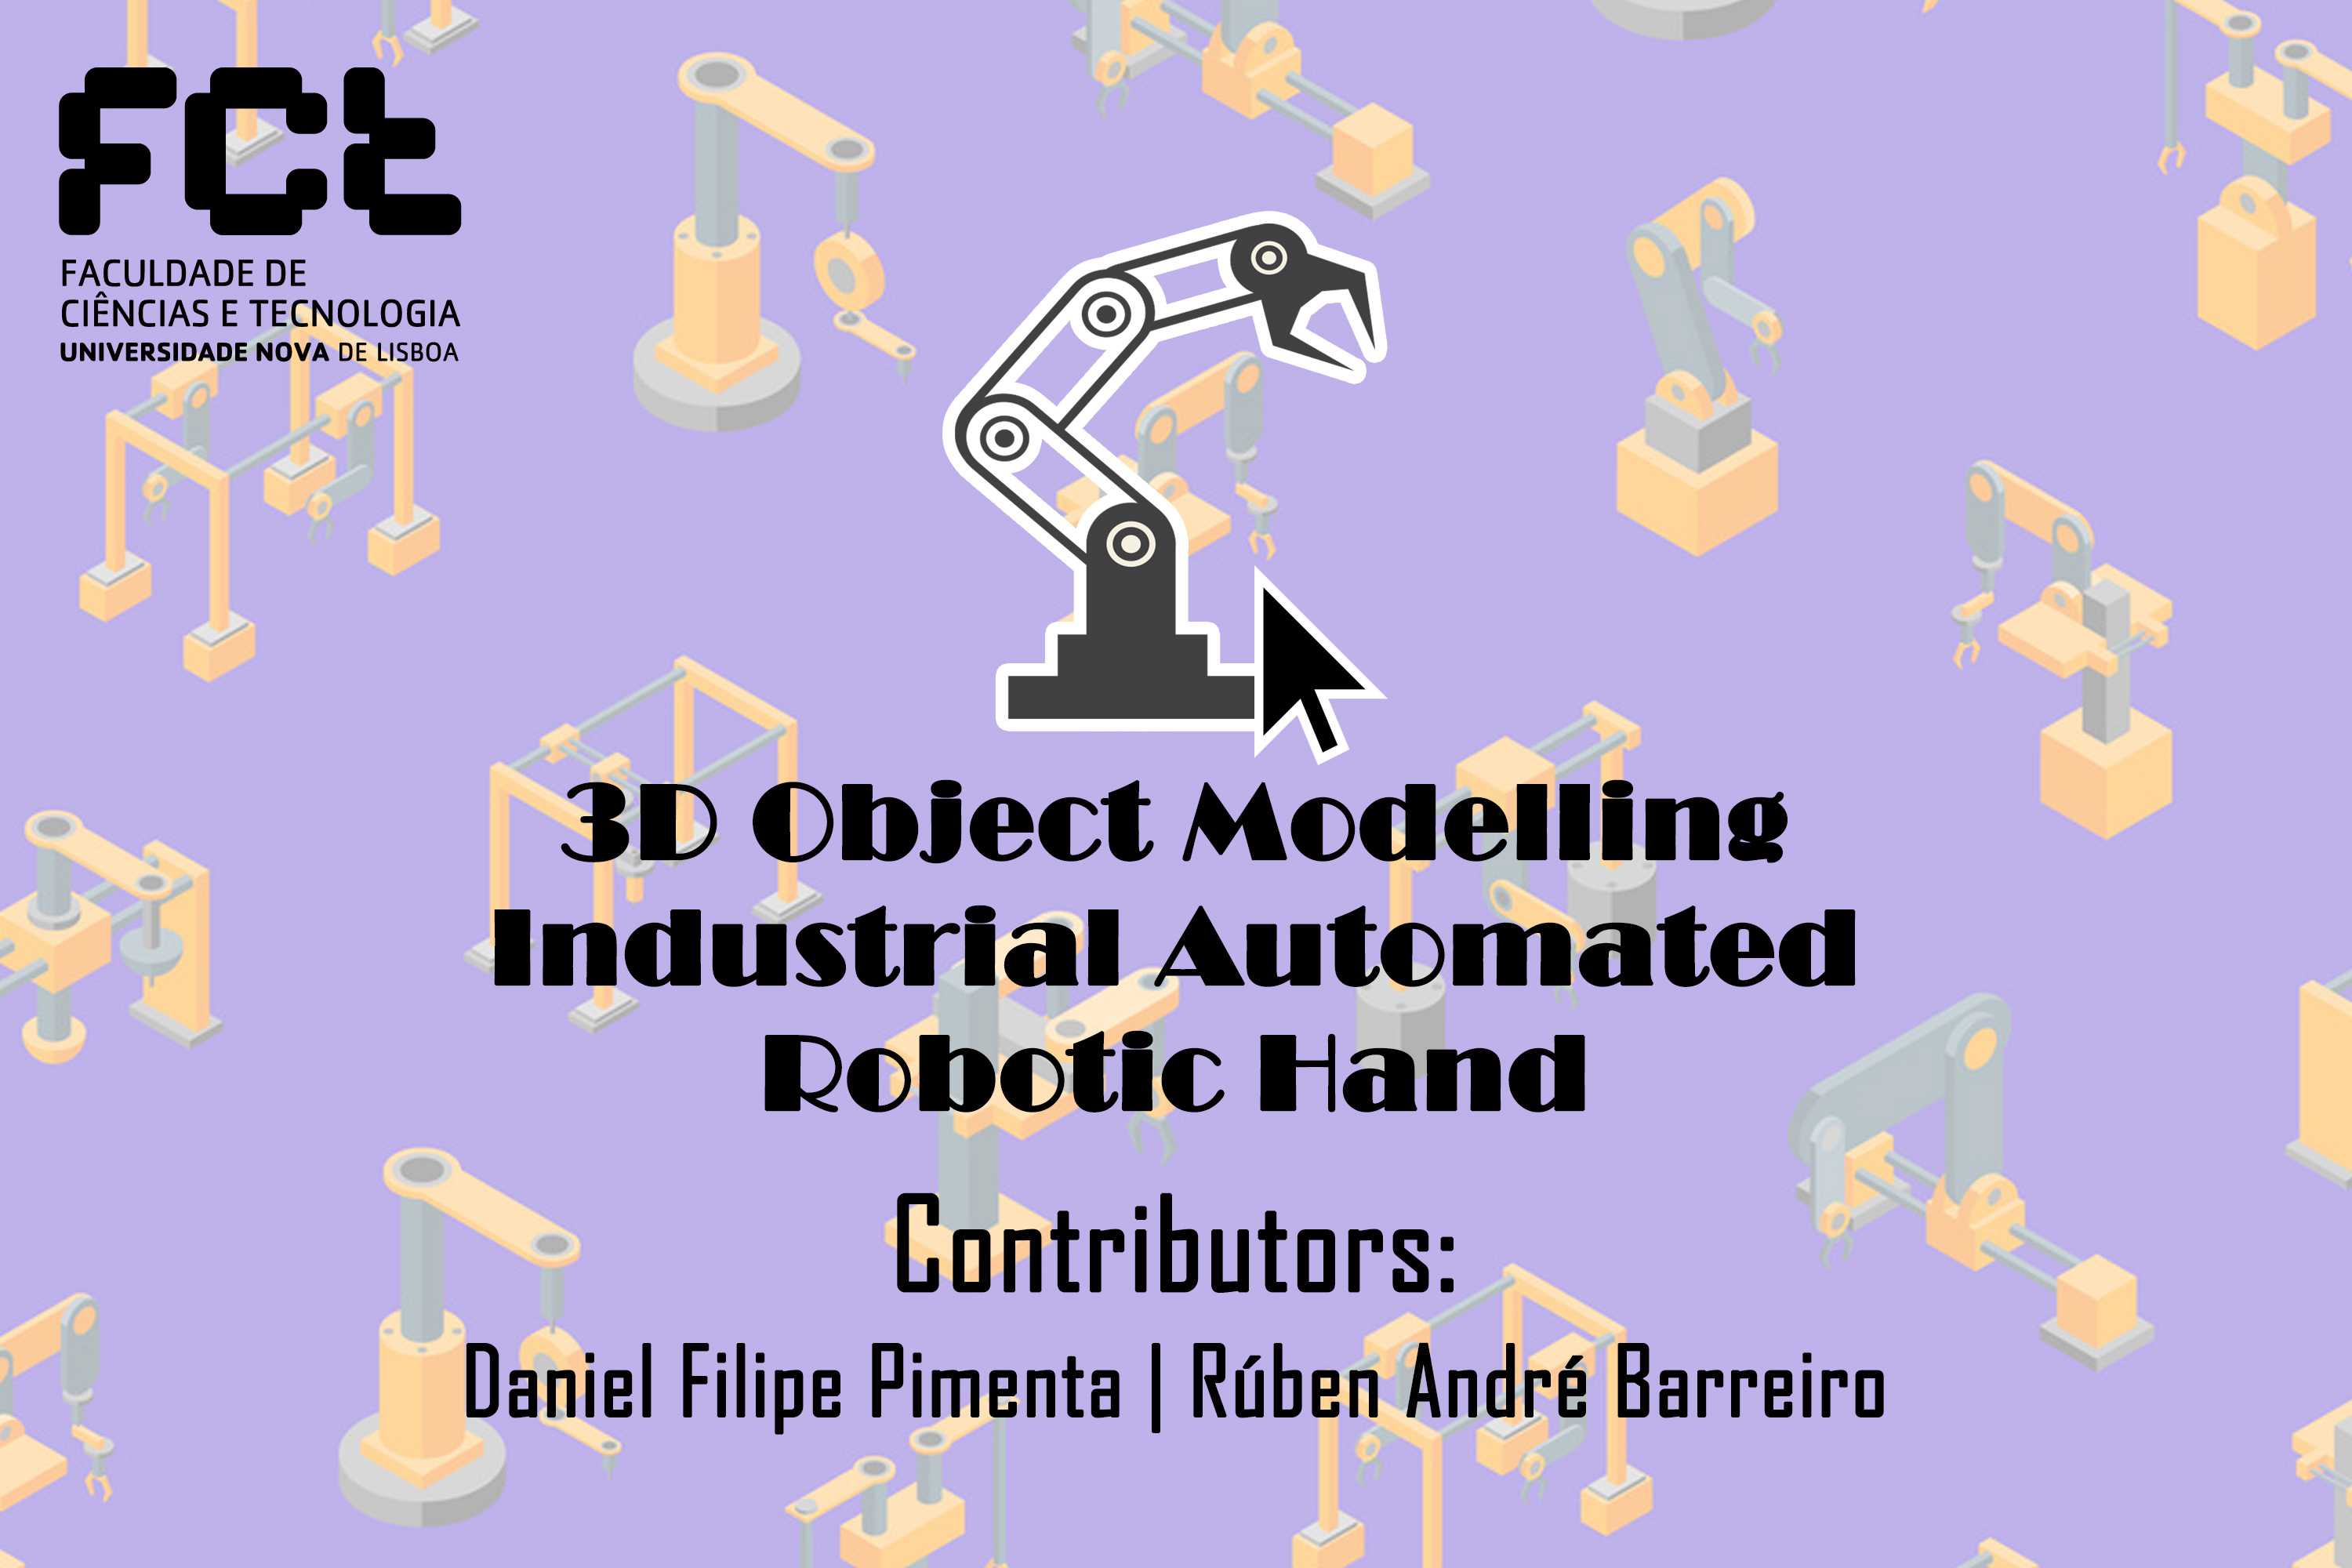 https://raw.githubusercontent.com/rubenandrebarreiro/3d-object-modelling-industrial-automated-robotic-hand/master/imgs/JPGs/banner-1.jpg